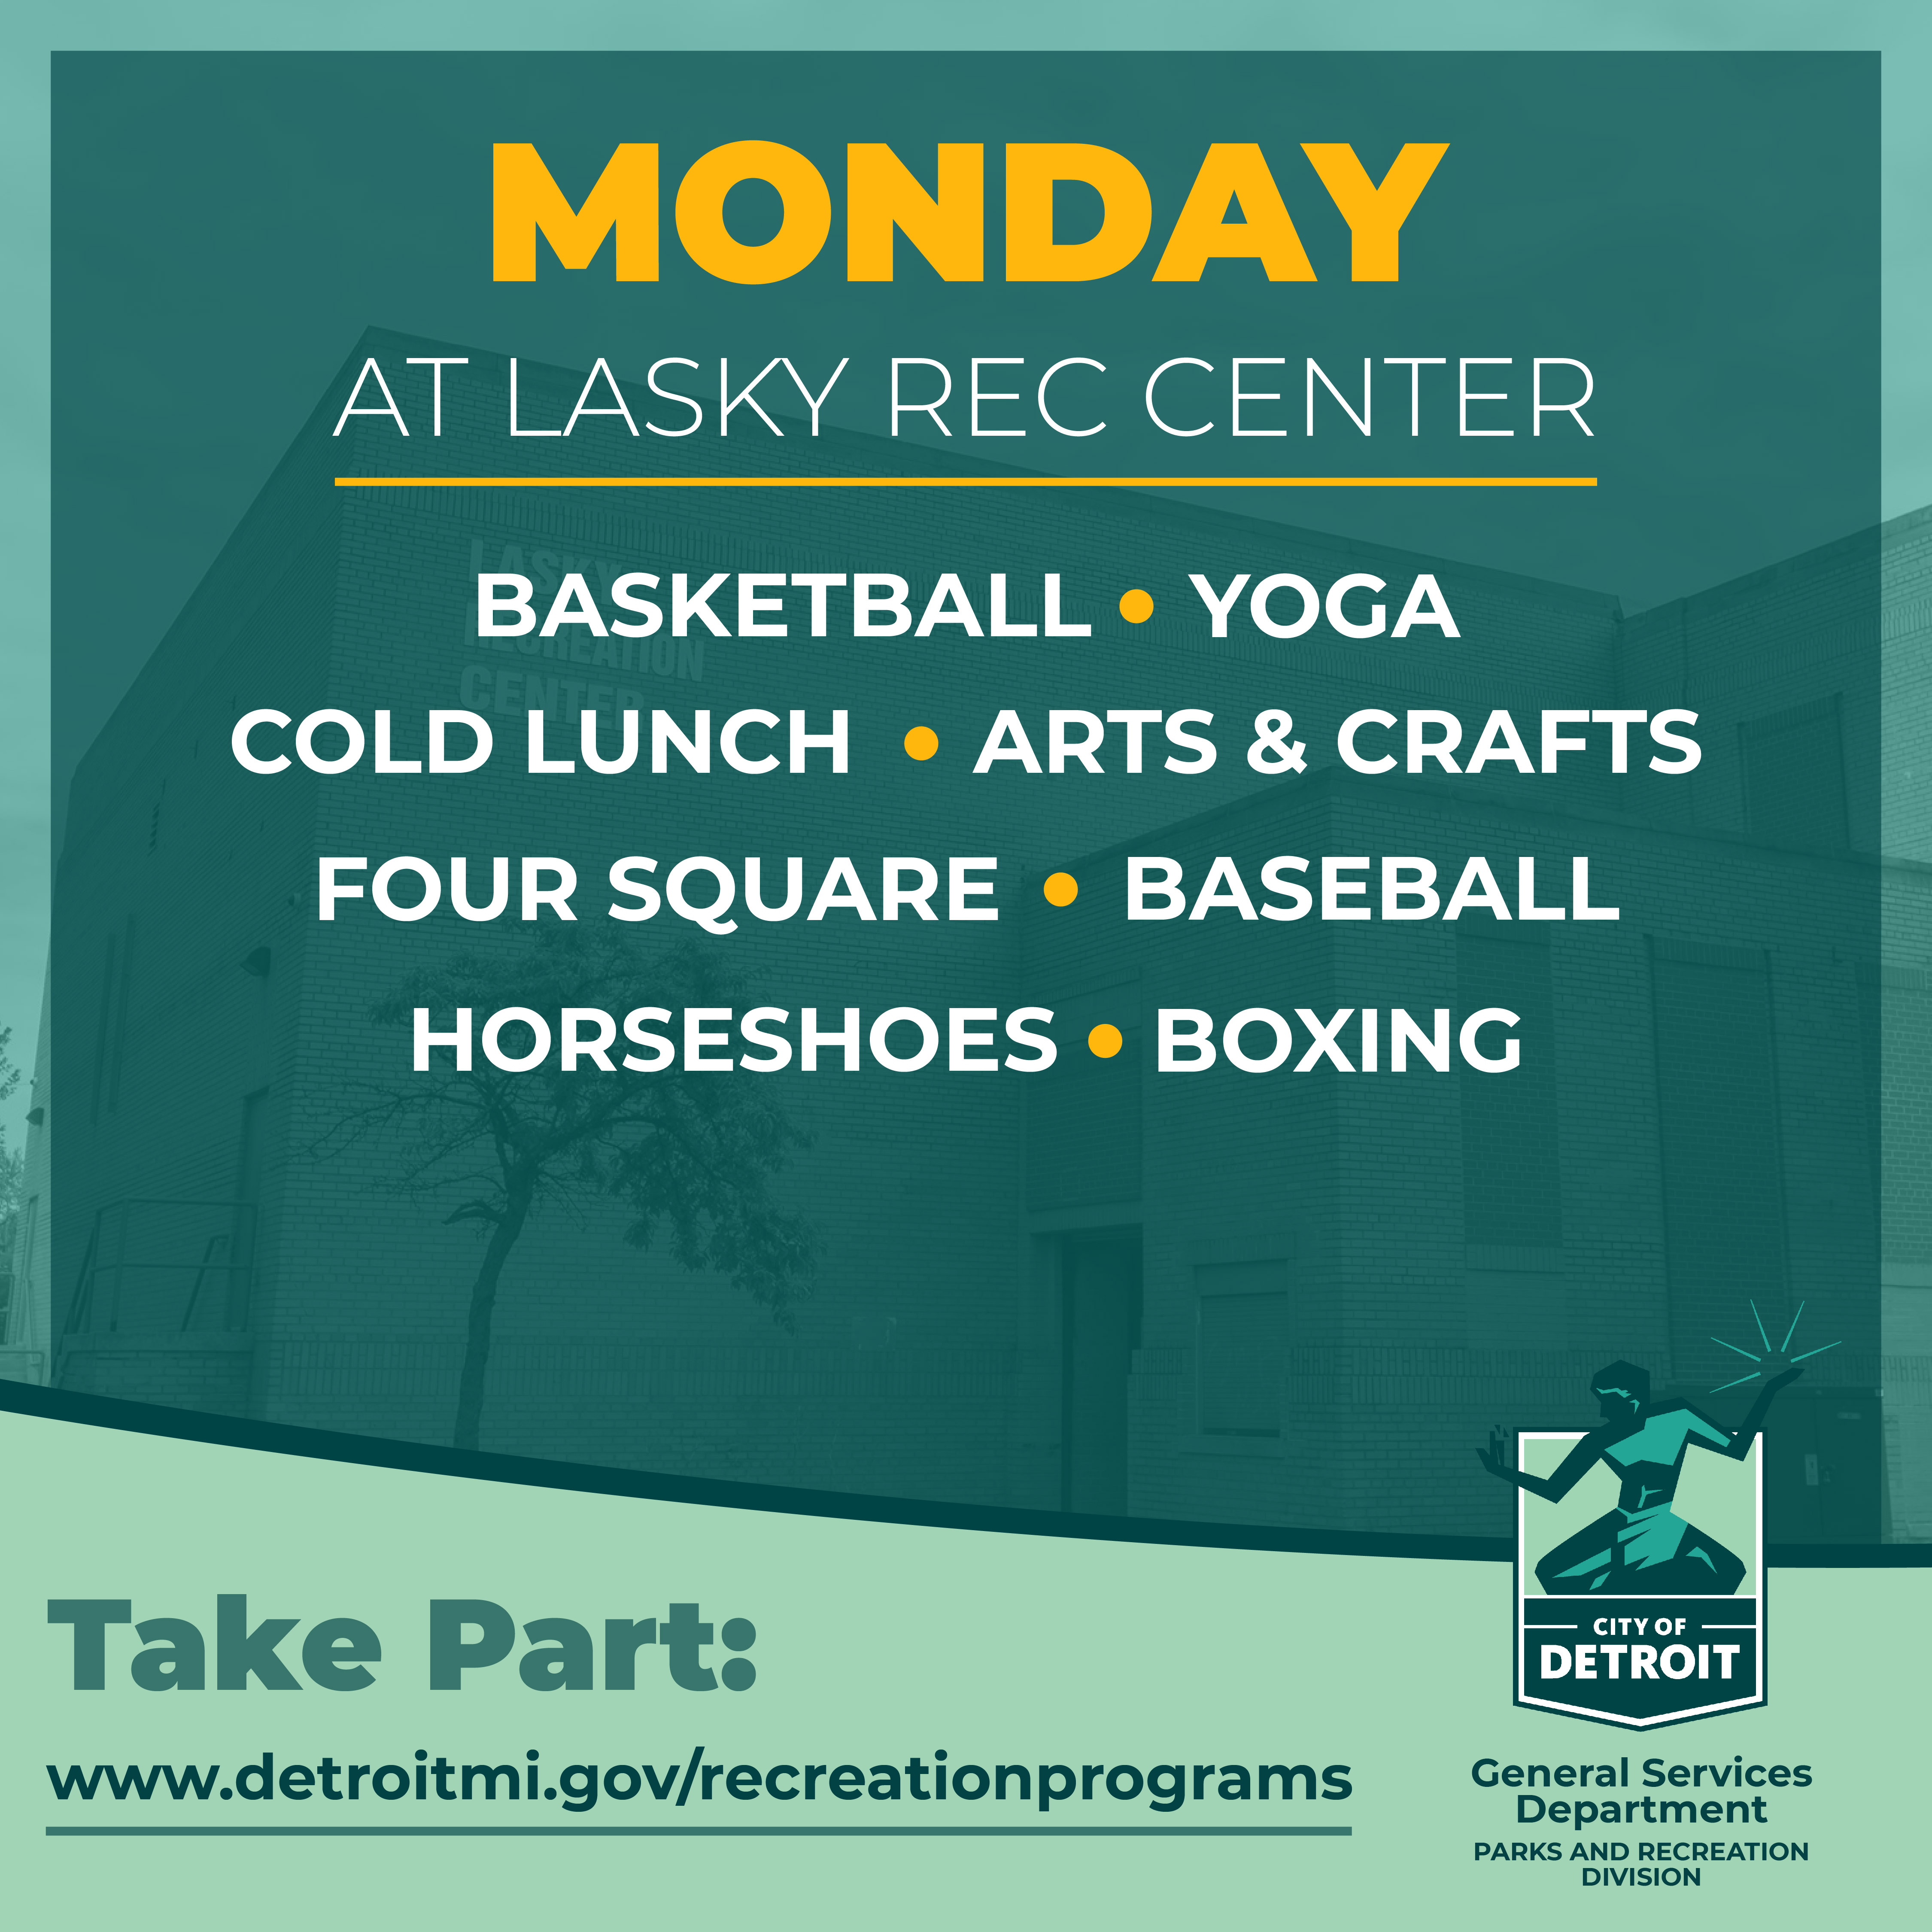 Mondays at Lasky